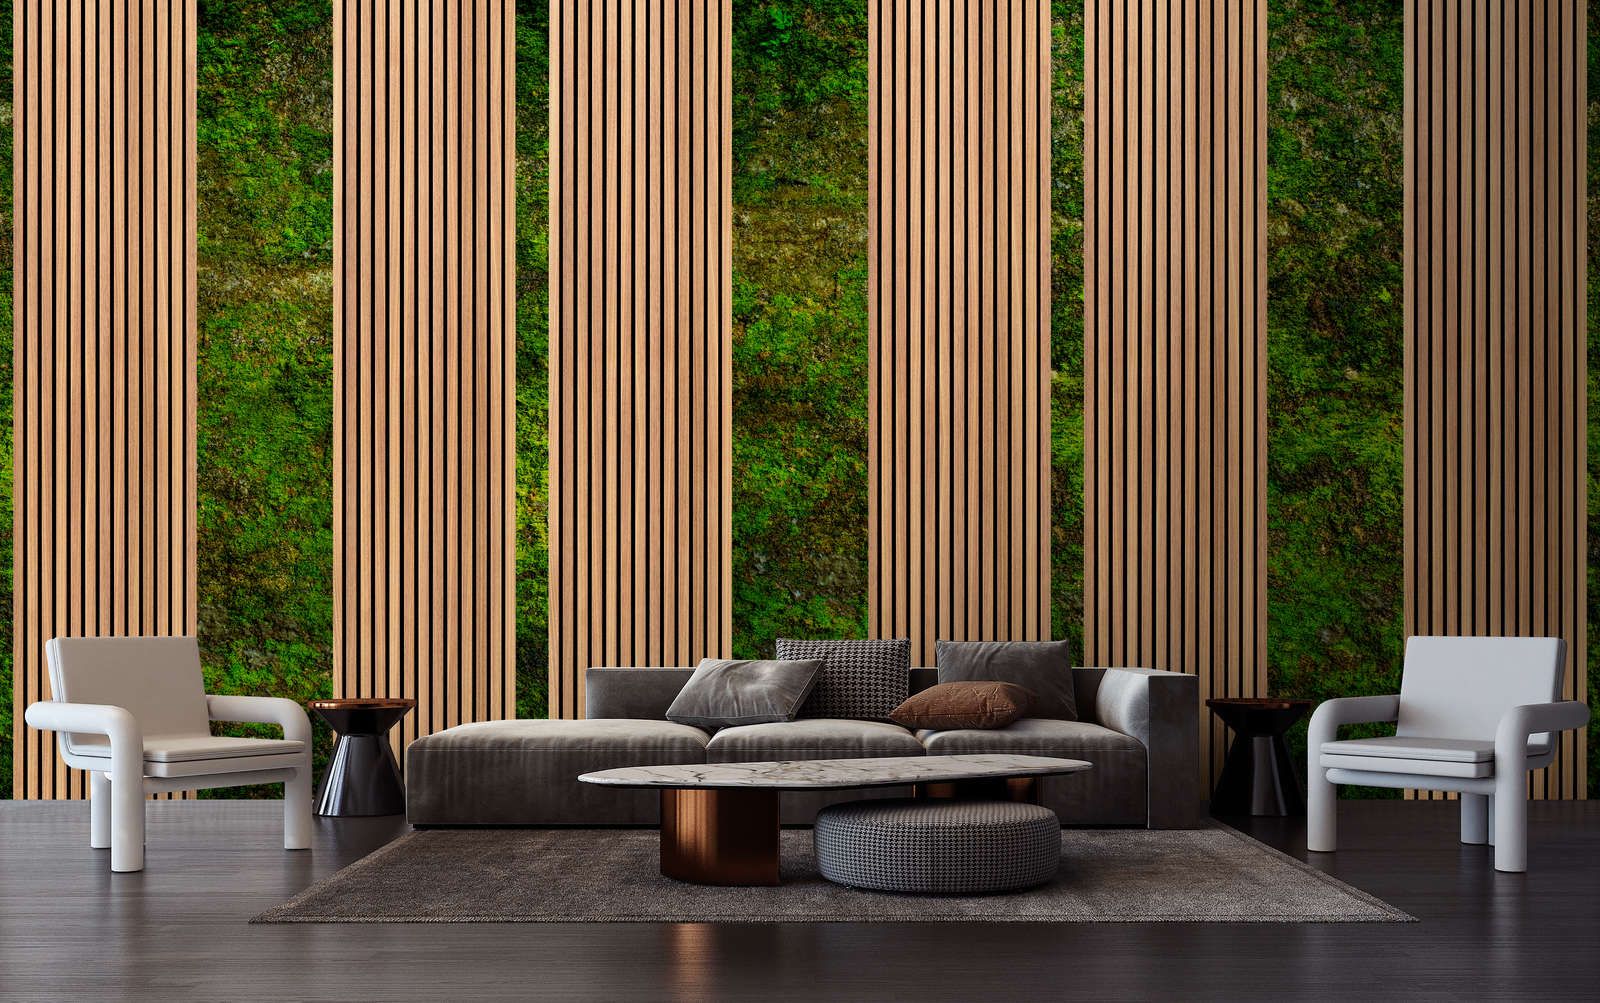             Photo wallpaper »panel 1« - Narrow wood panels & moss - Smooth, slightly shiny premium non-woven fabric
        